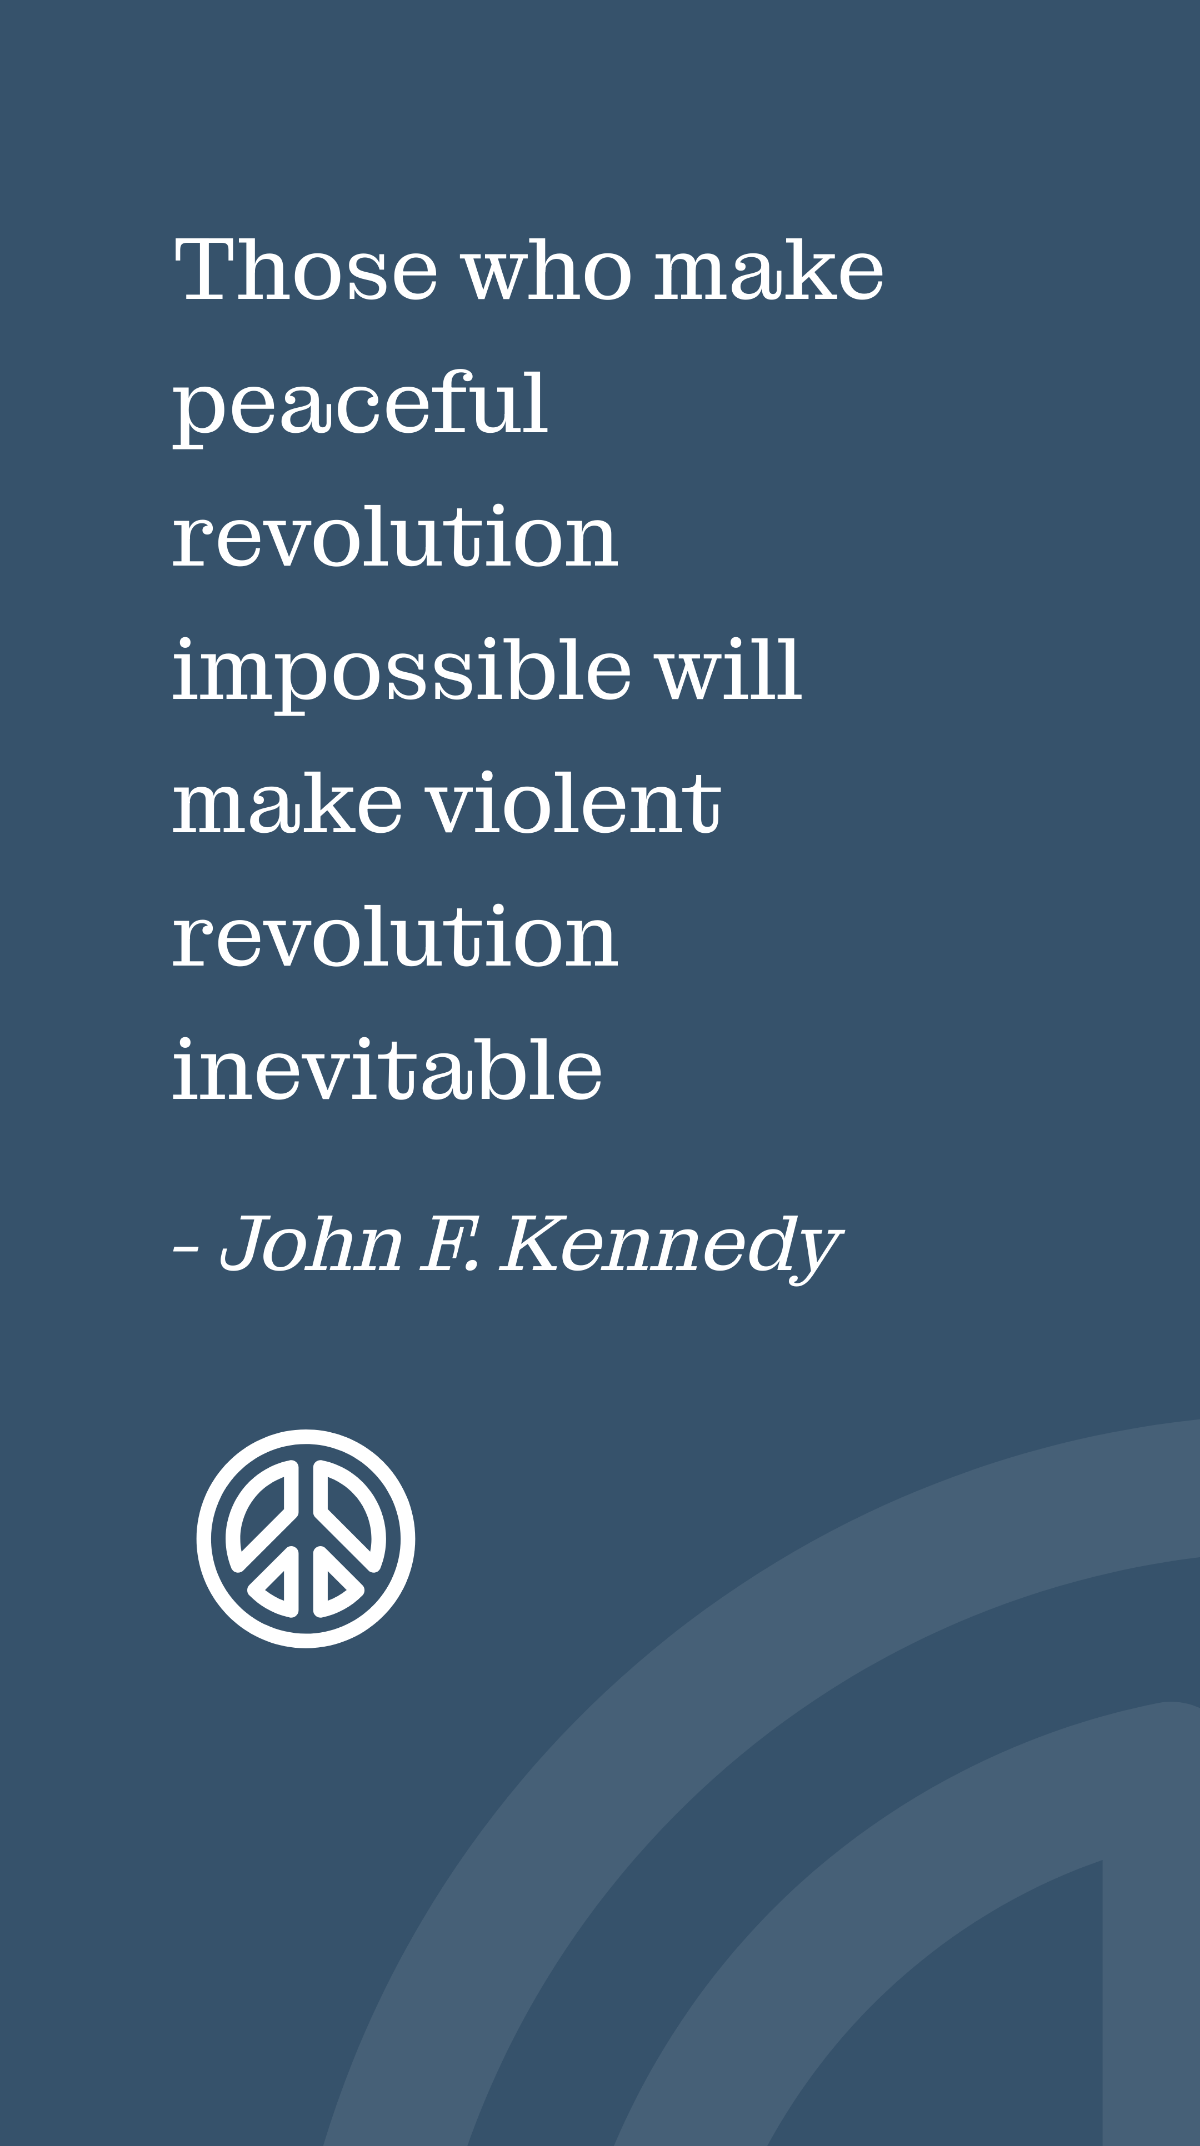 John F. Kennedy - Those who make peaceful revolution impossible will make violent revolution inevitable